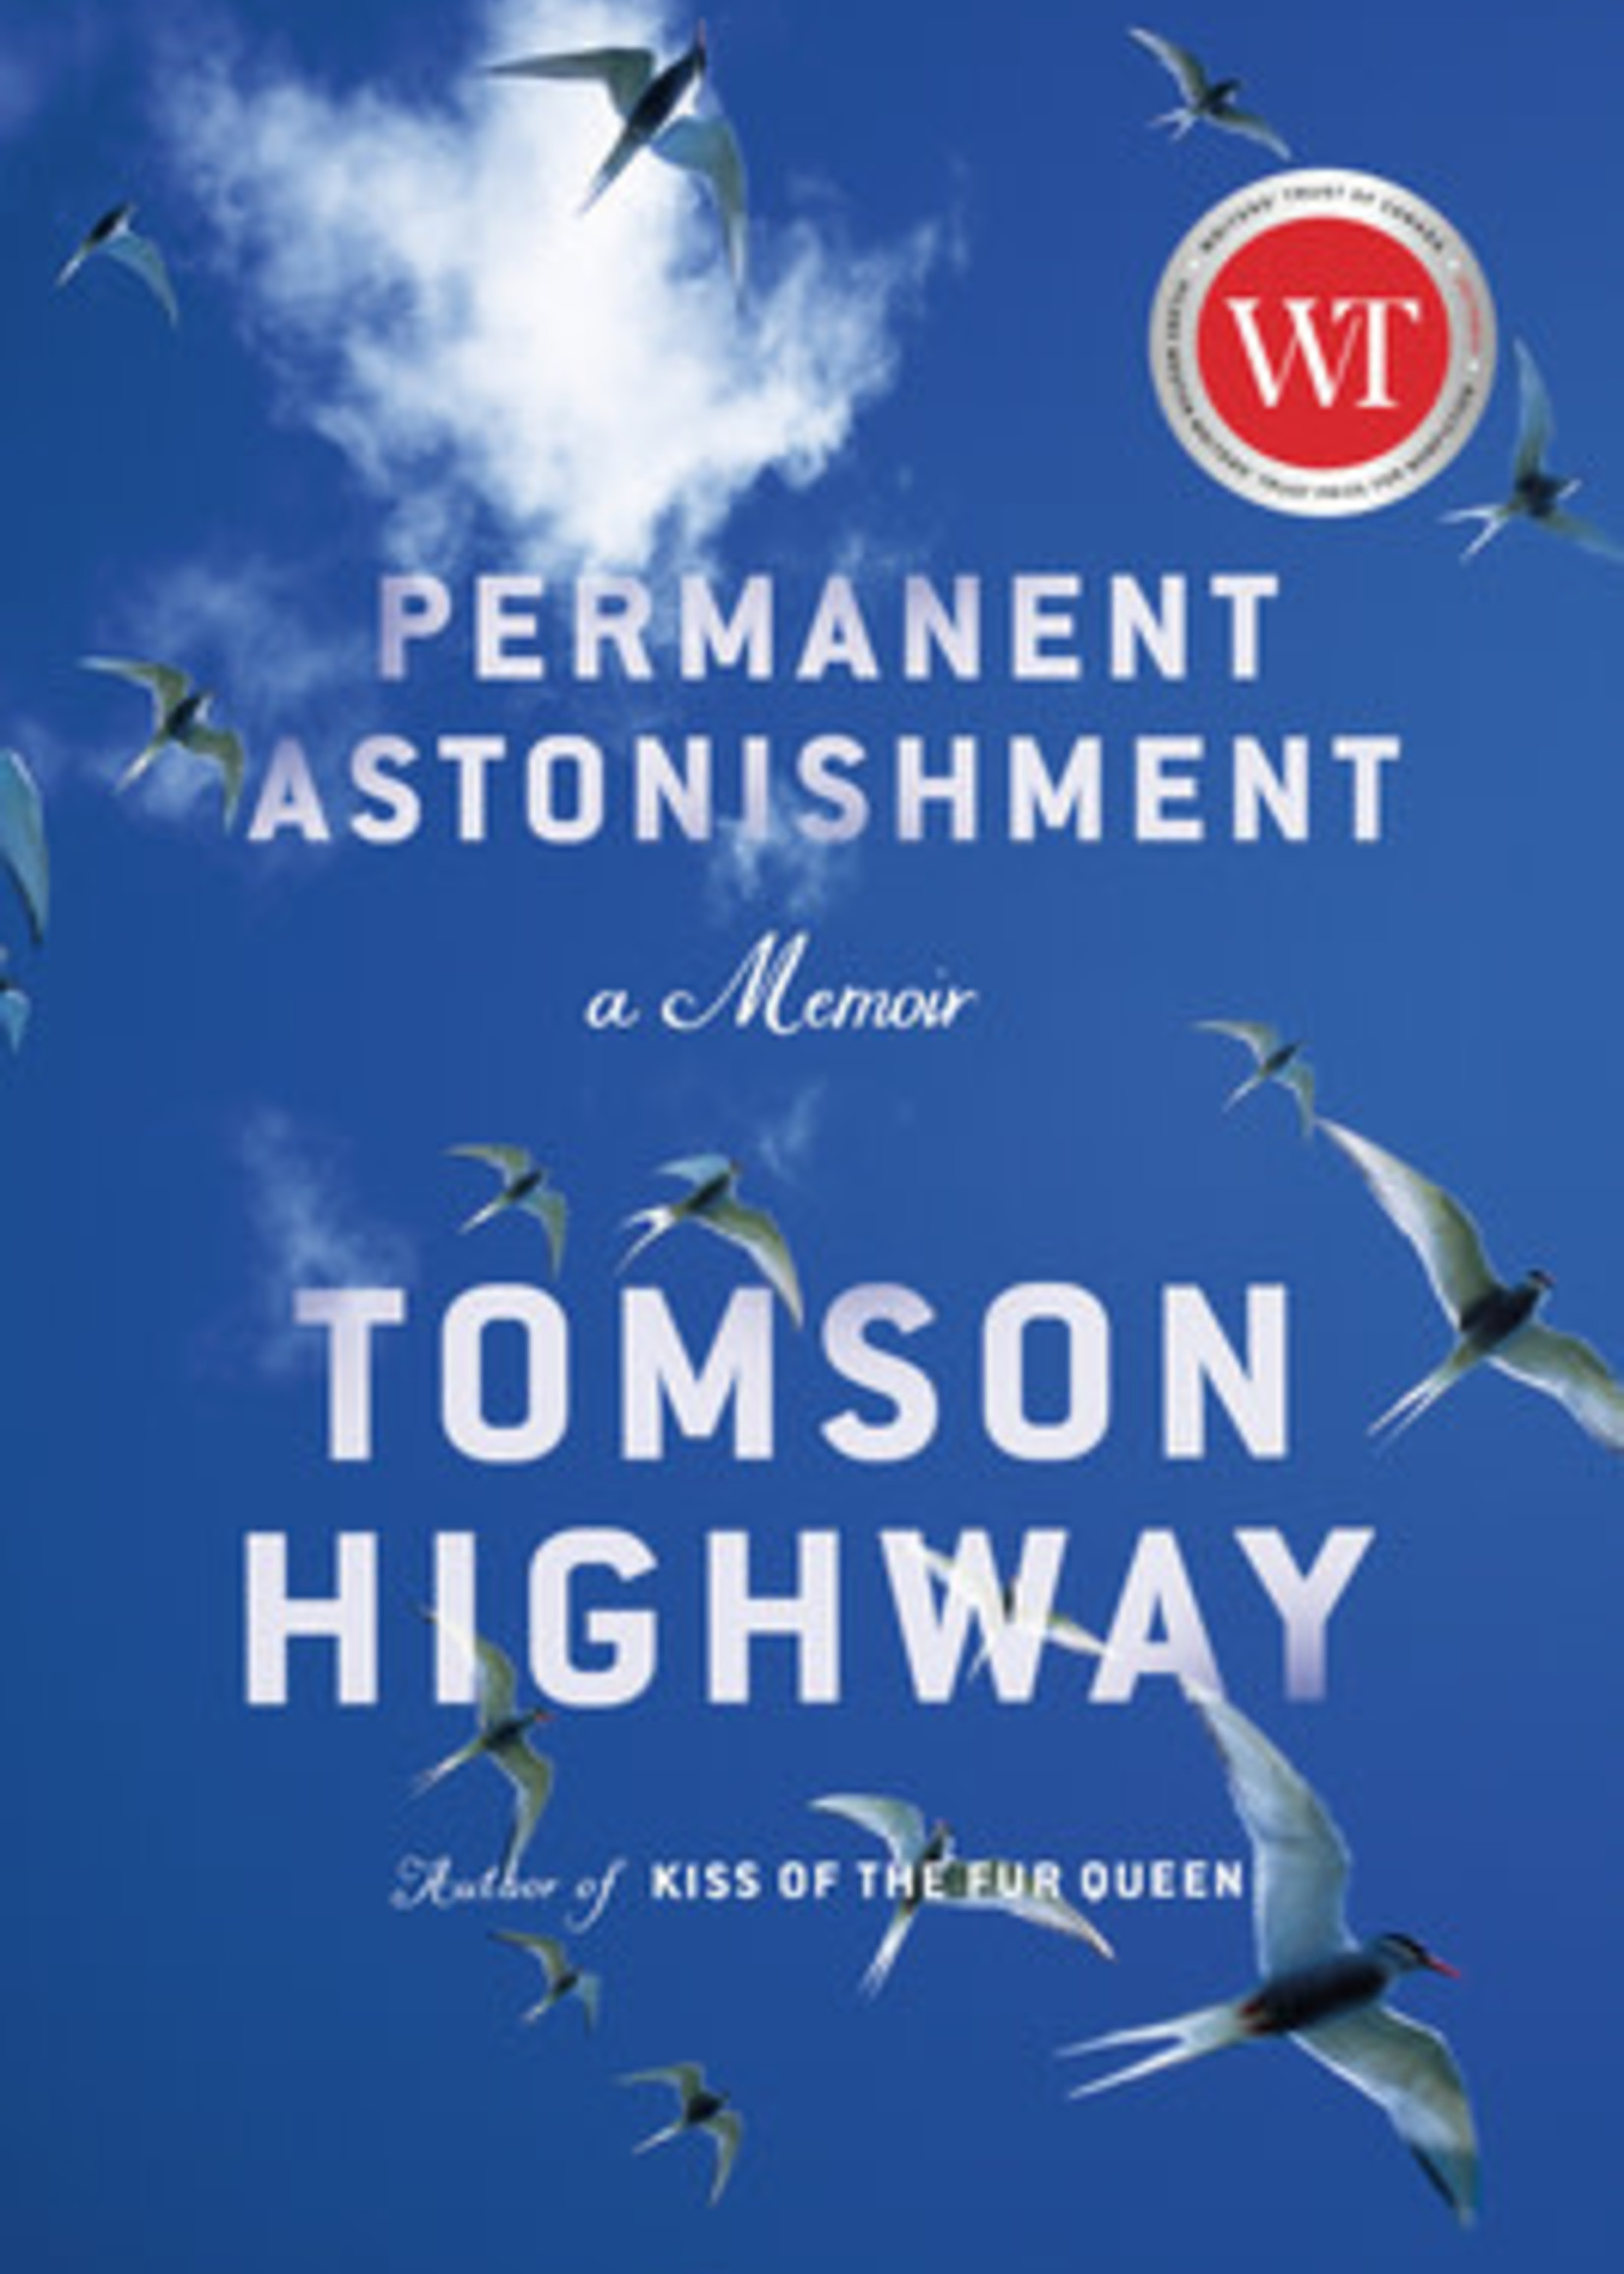 Permanent Astonishment: A Memoir by Tomson Highway